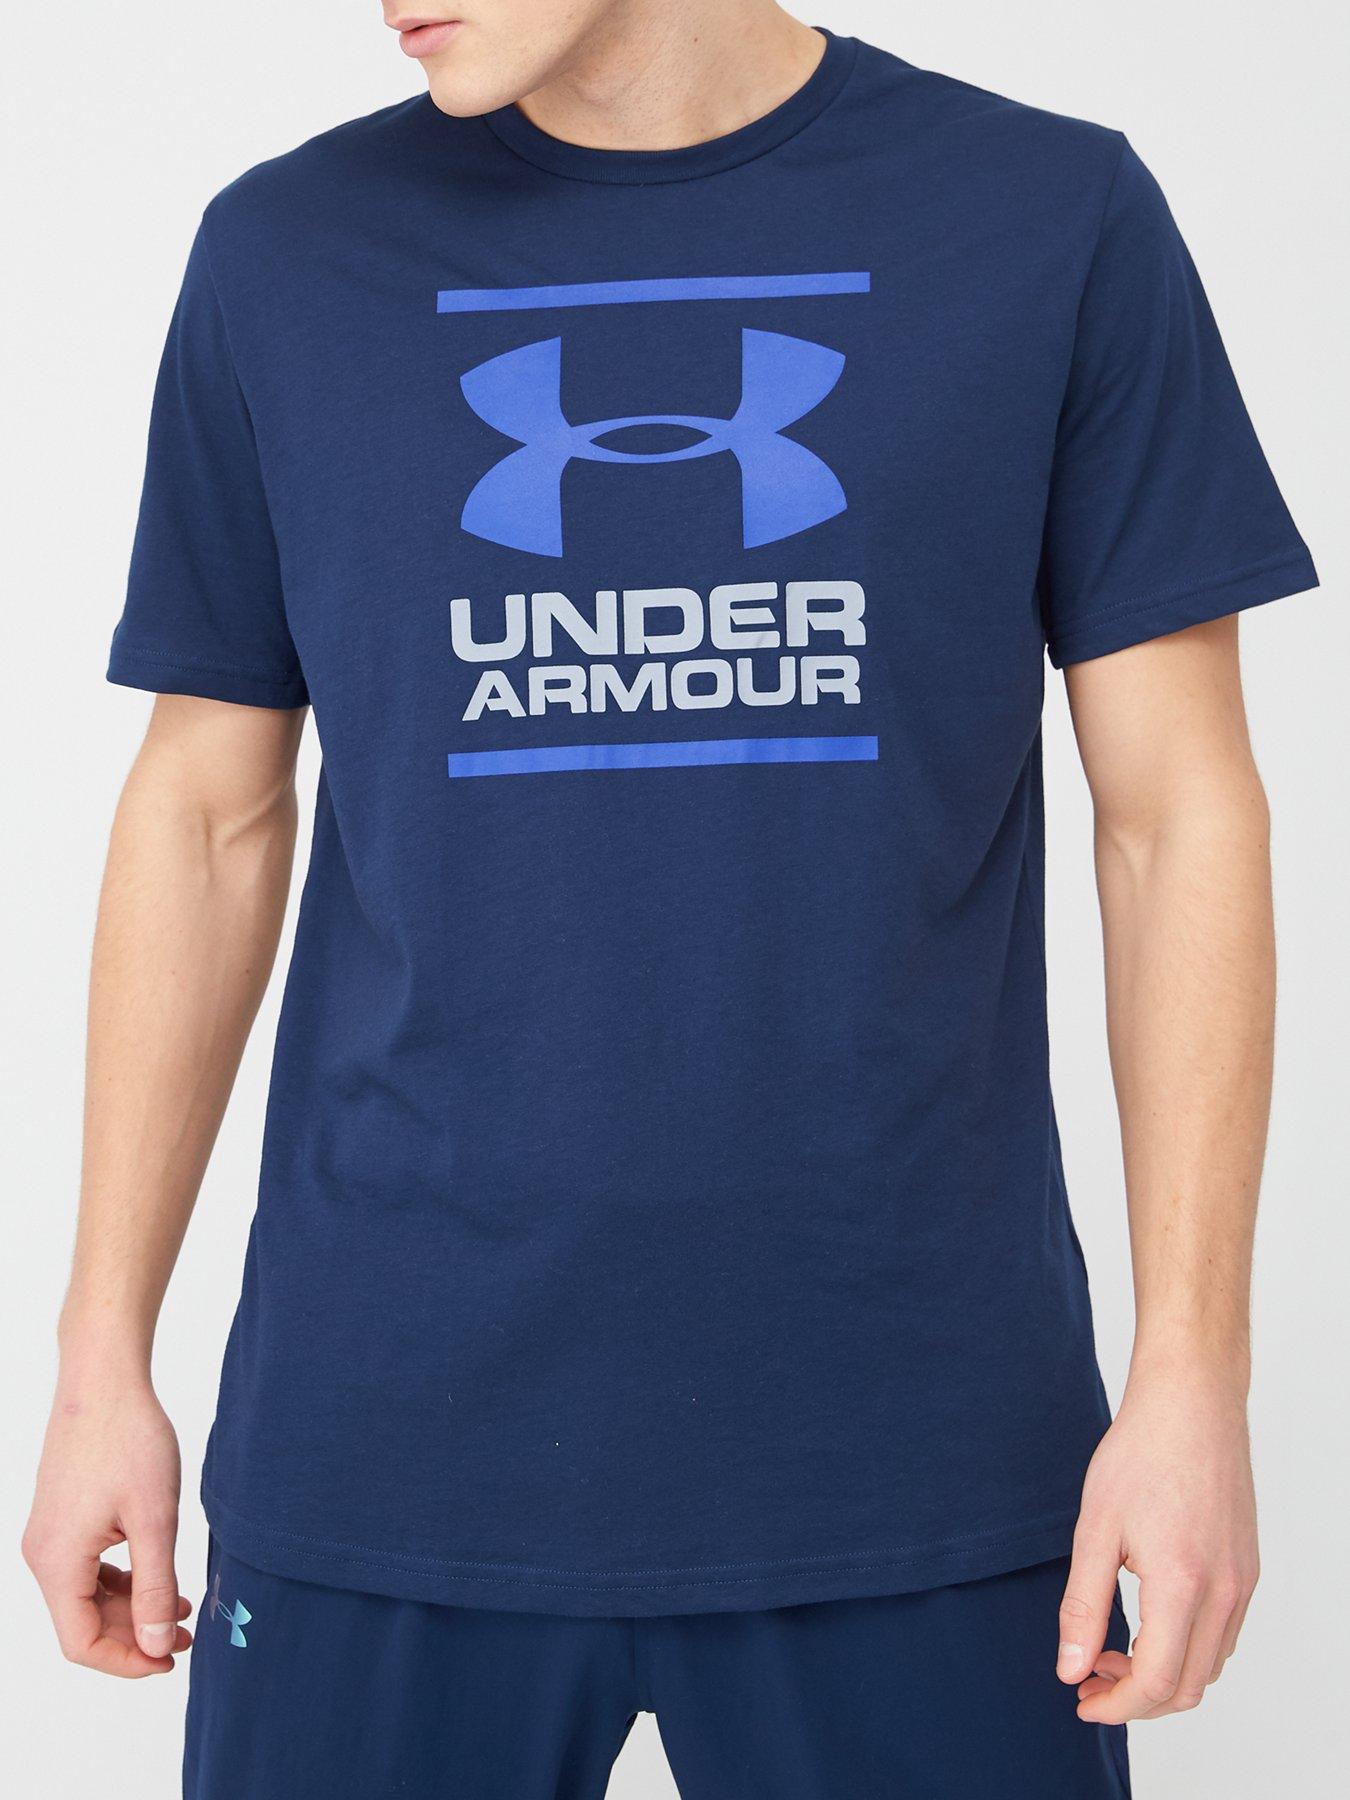 under armour cheap shirts